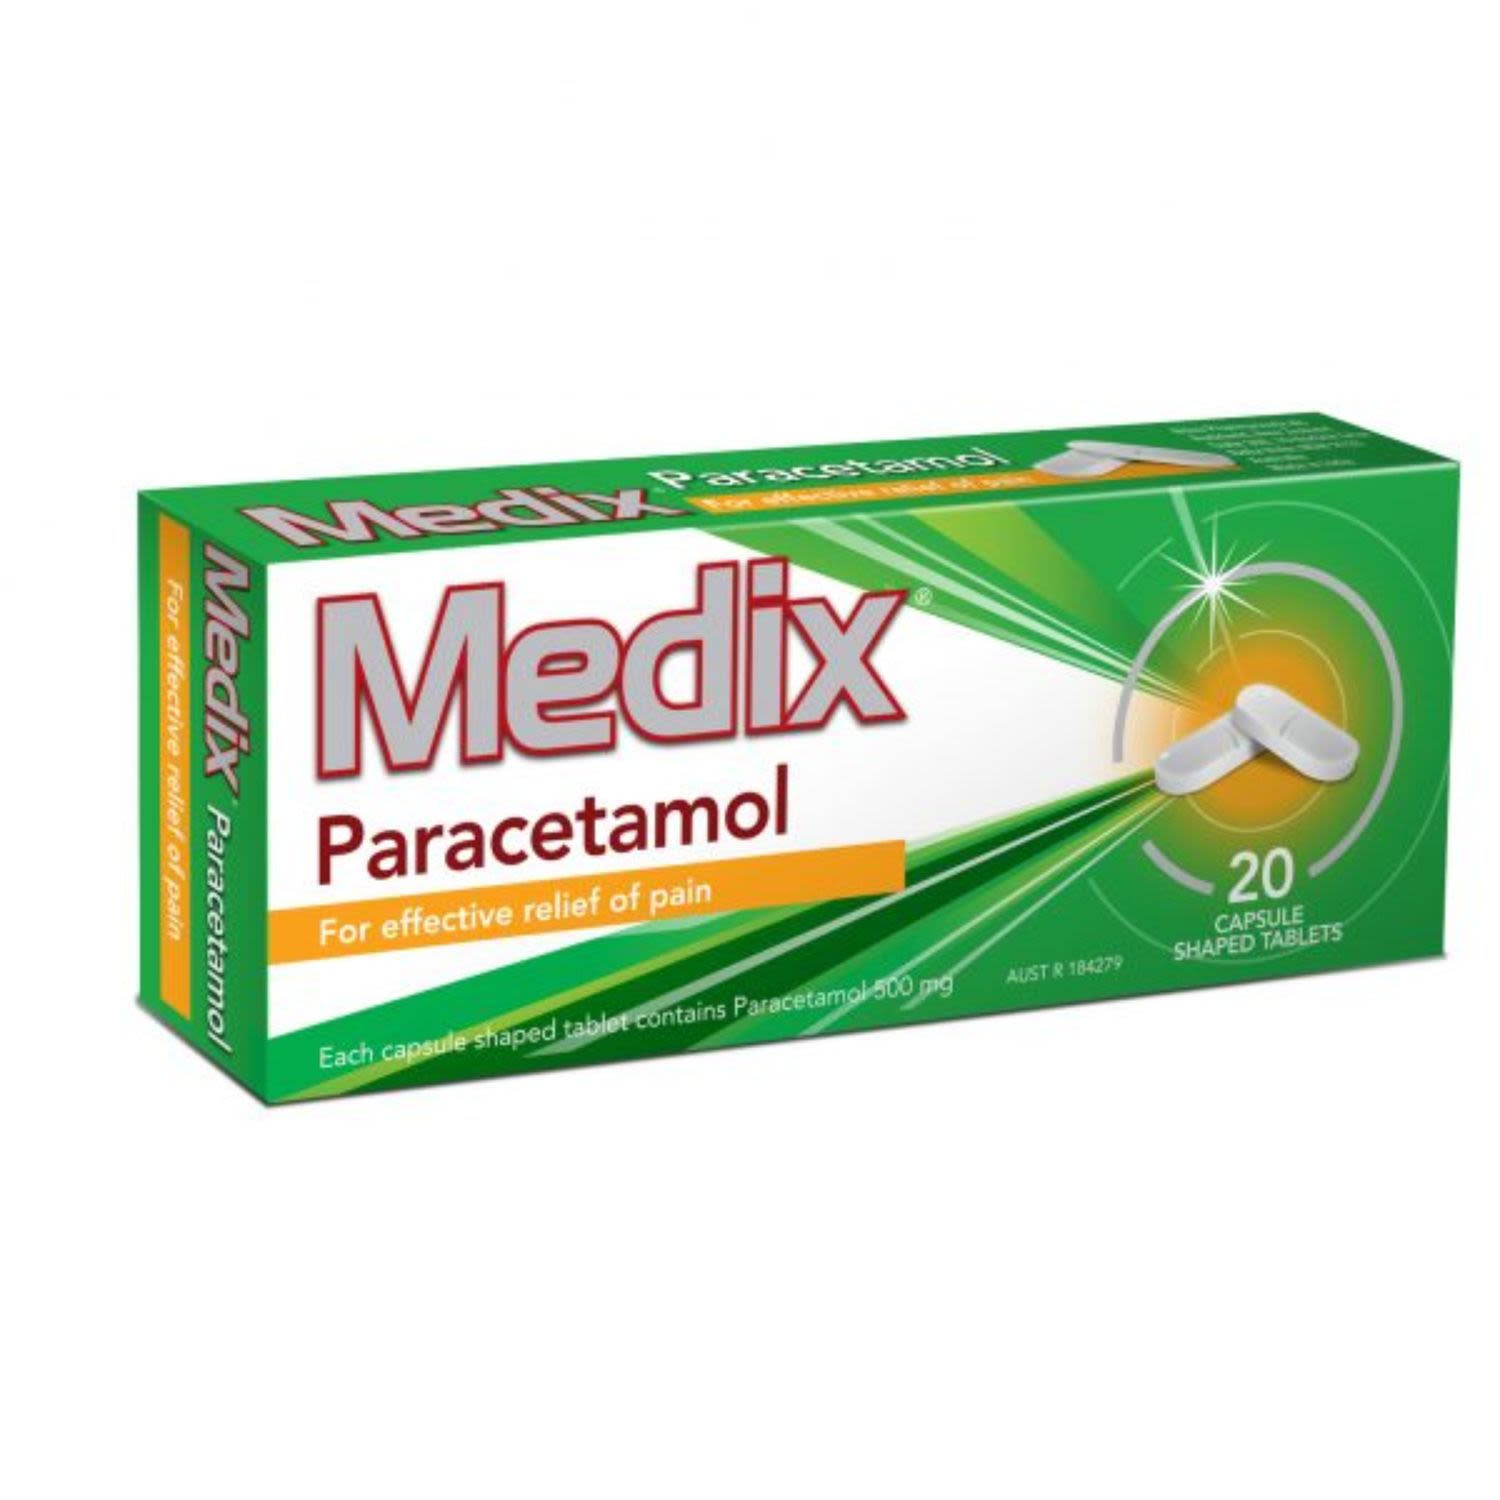 Medix Paracetamol Caplets, 20 Each